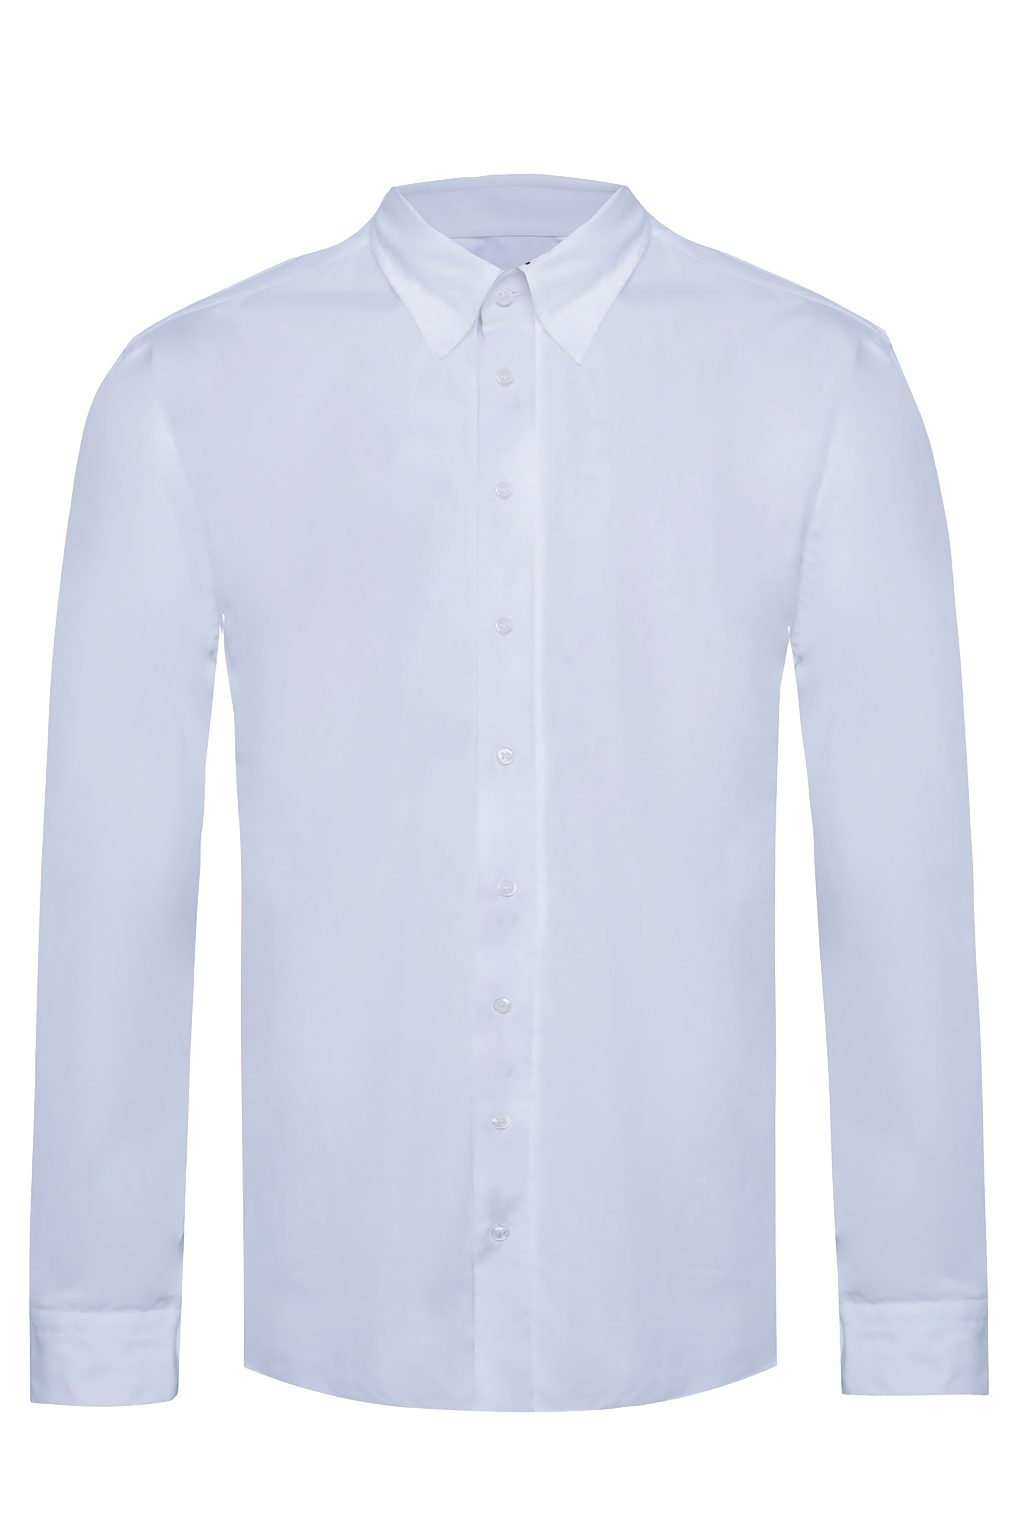 Giorgio Armani Shirt Vitkac Clothing Men\'s collar snap | with 